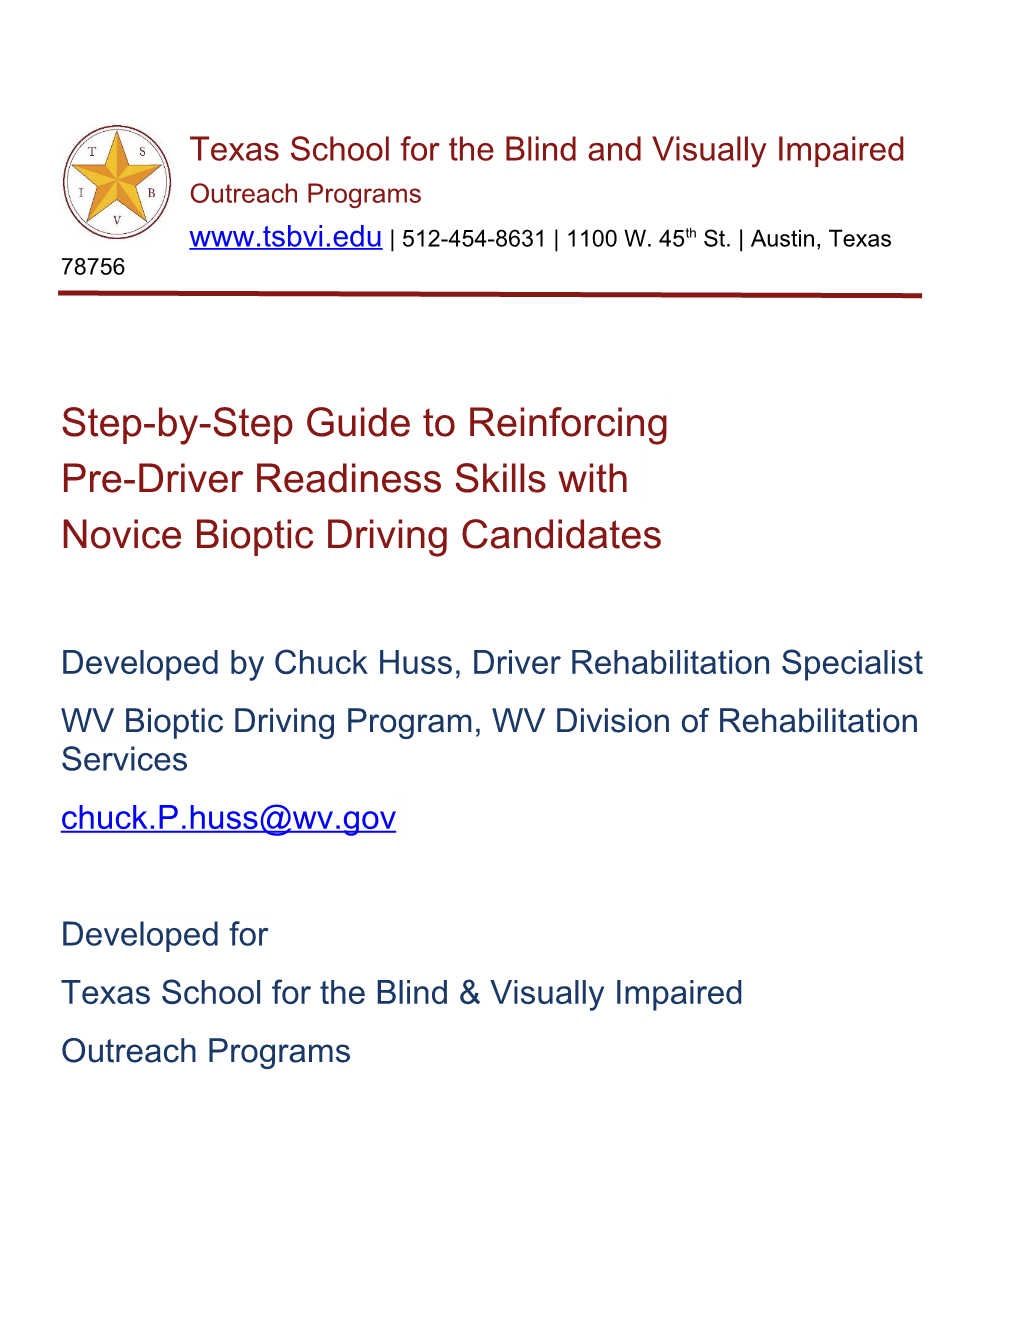 Pre-Driver Readiness Skills